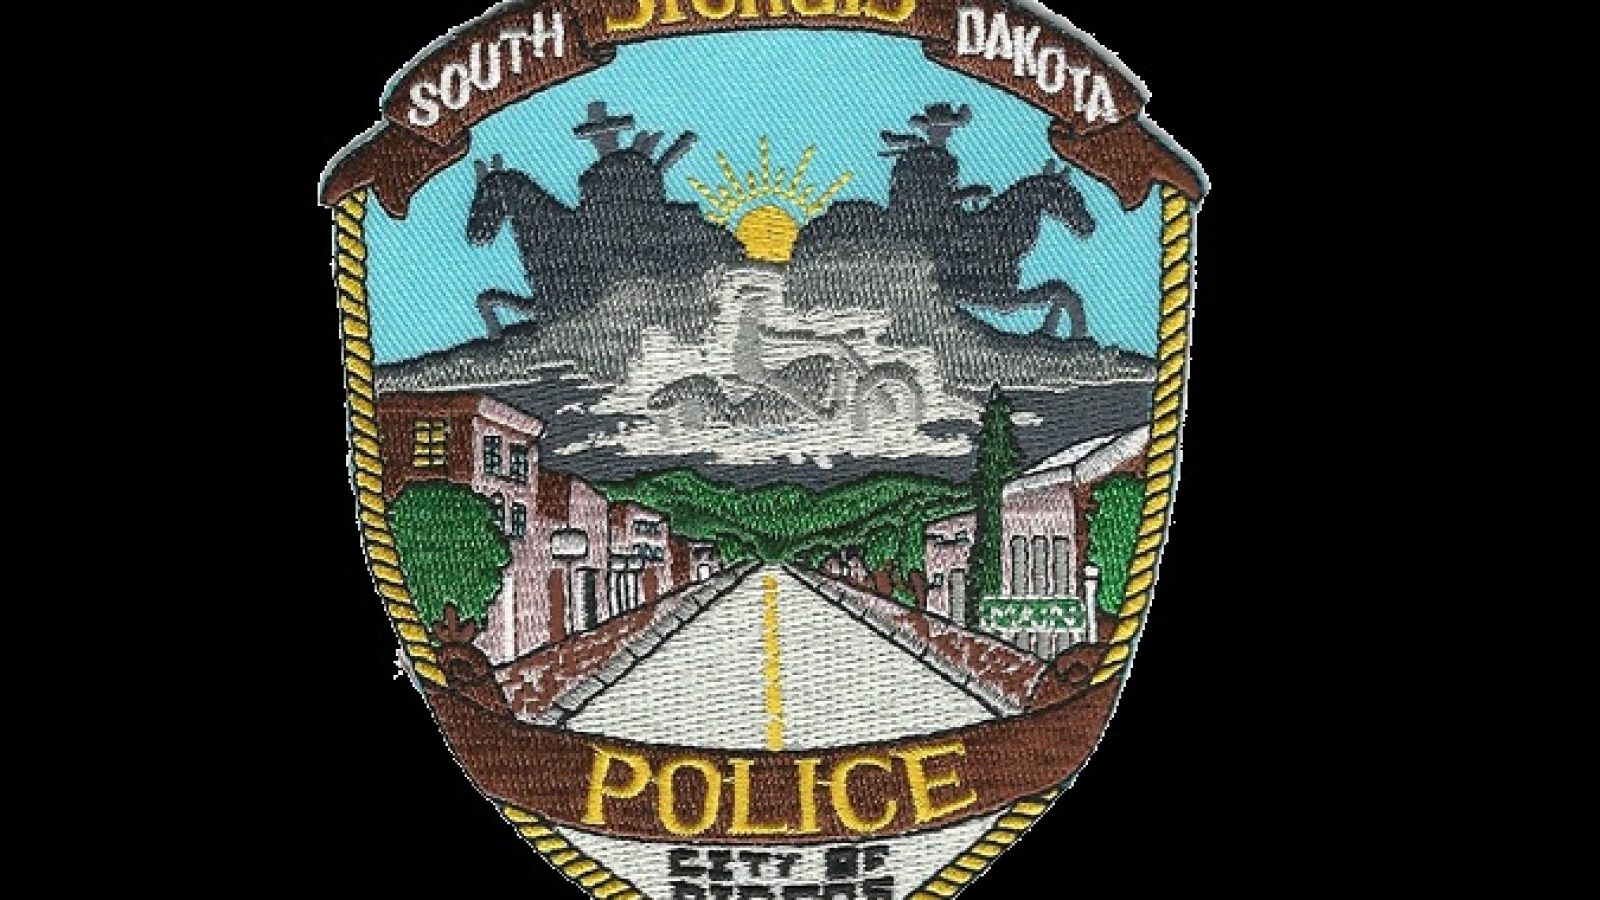 Sturgis-Police-Badge-1